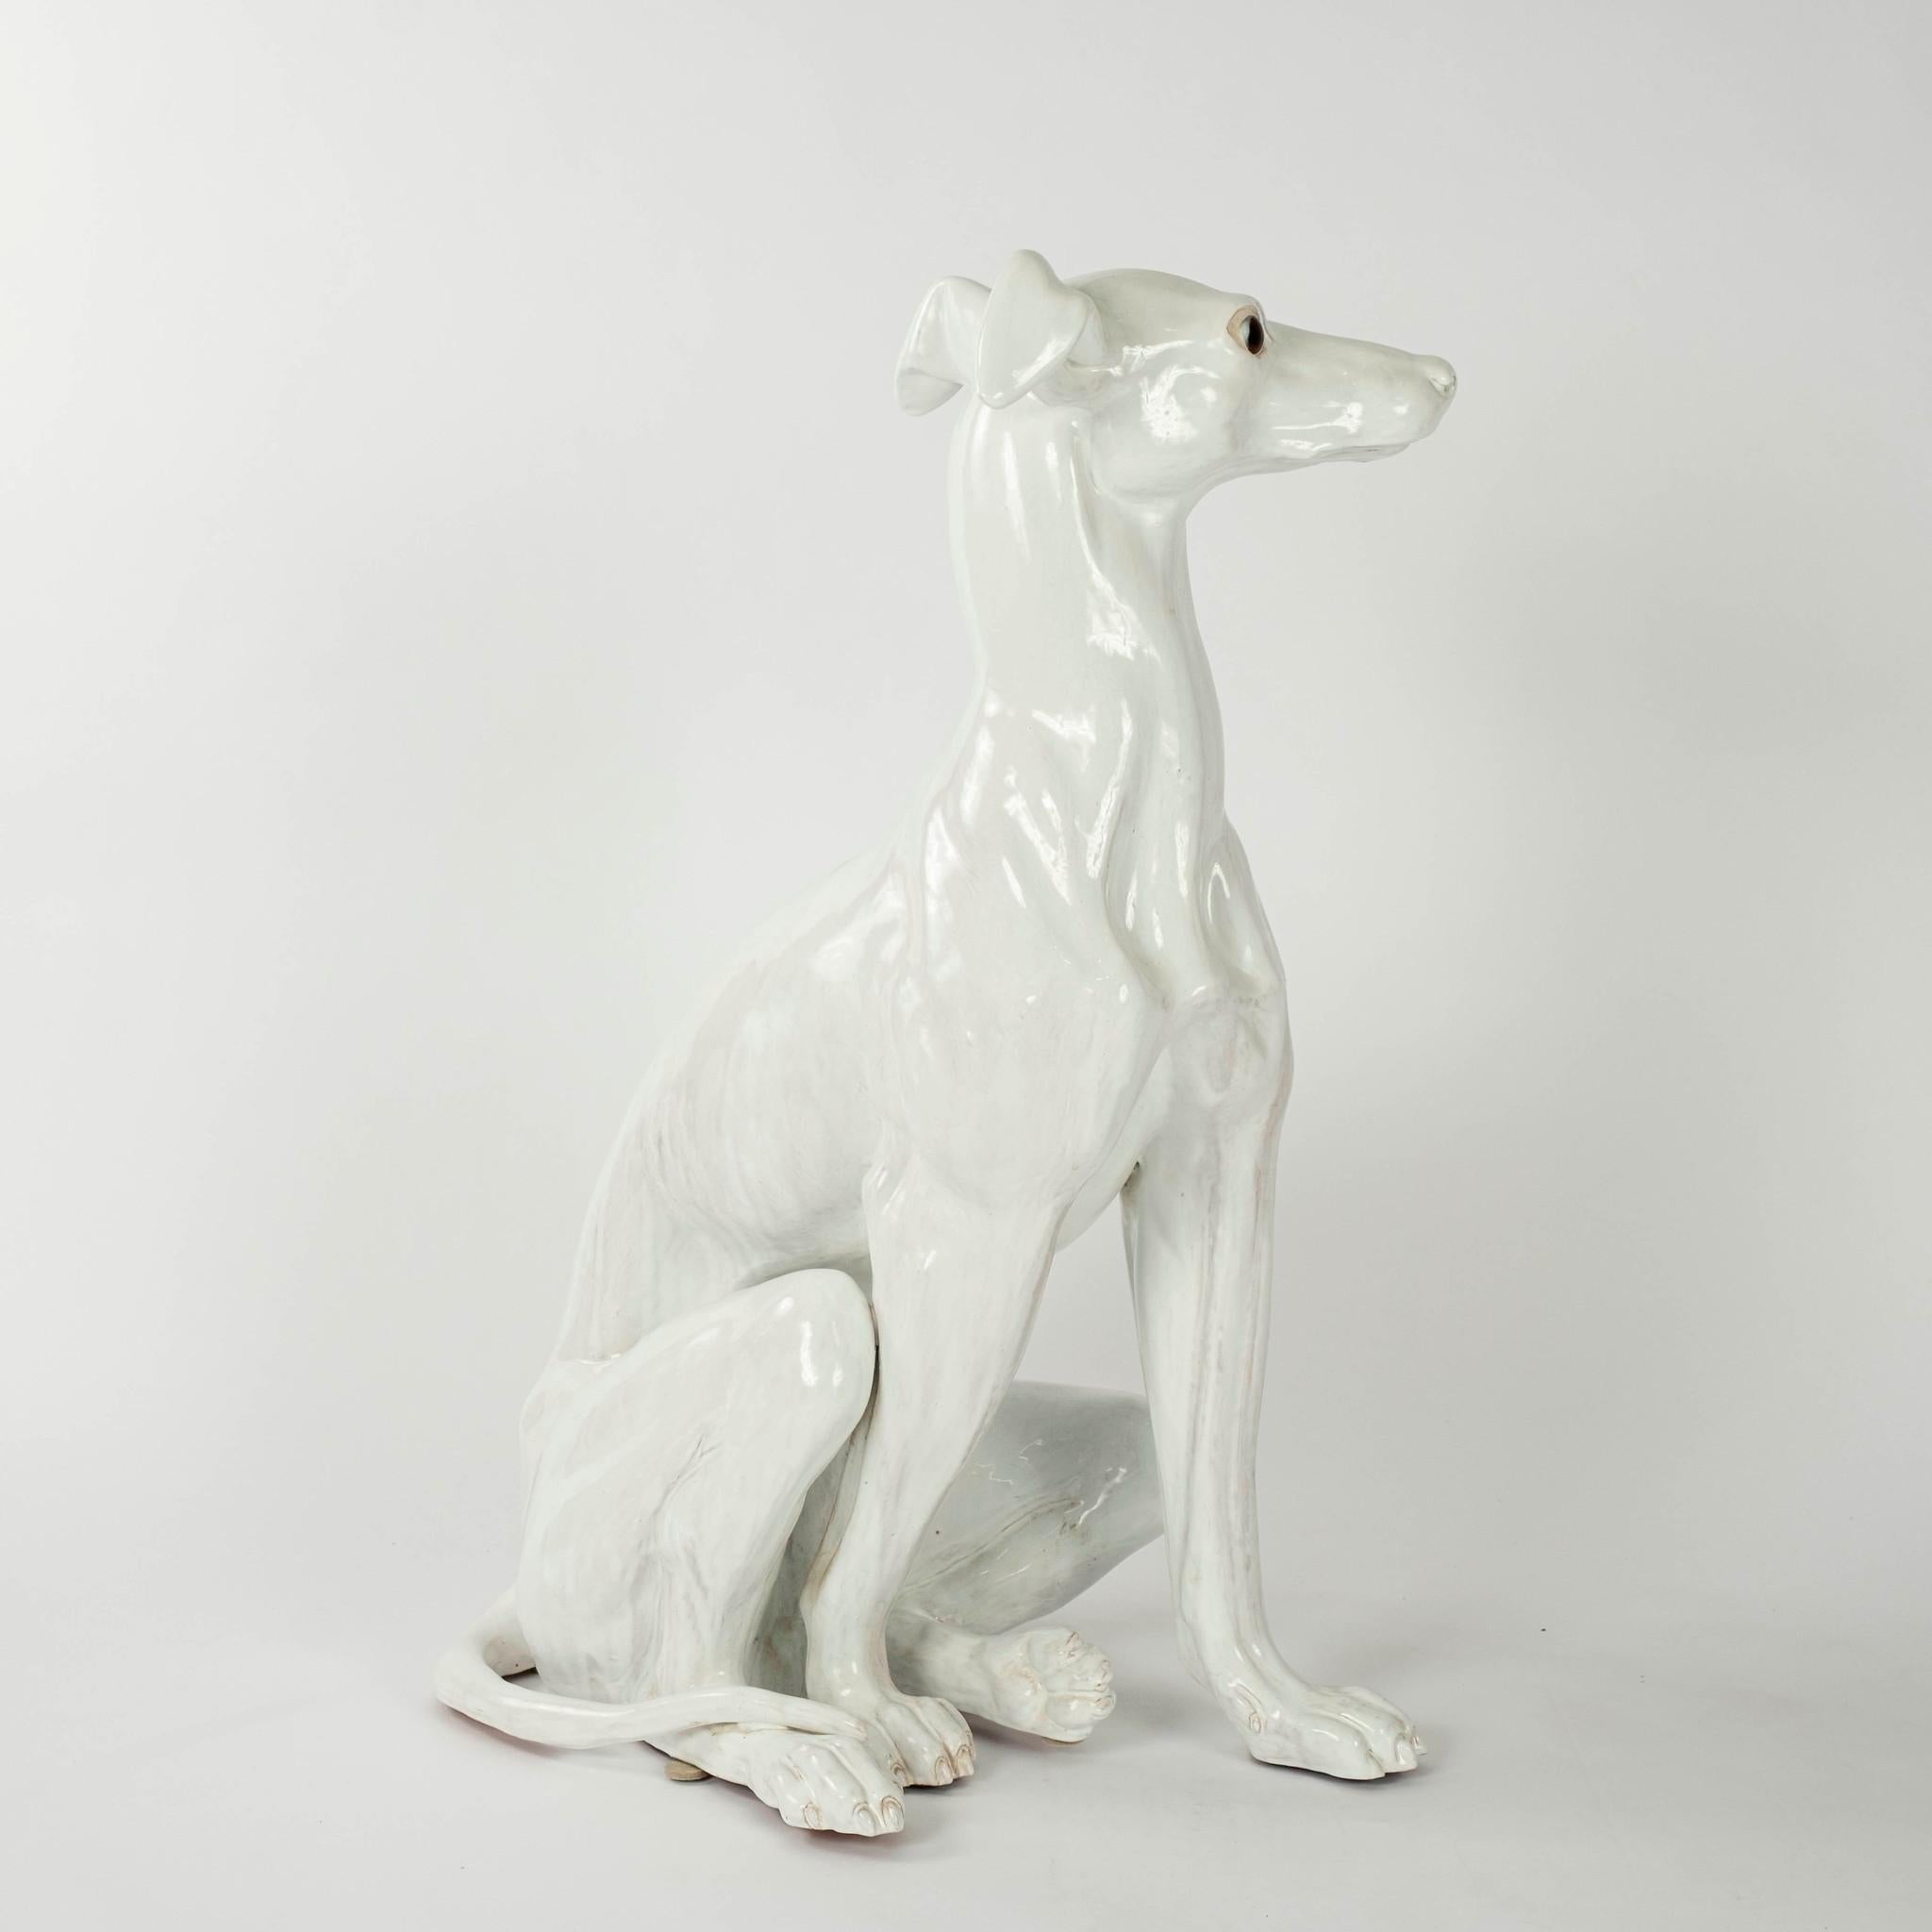 white italian greyhound